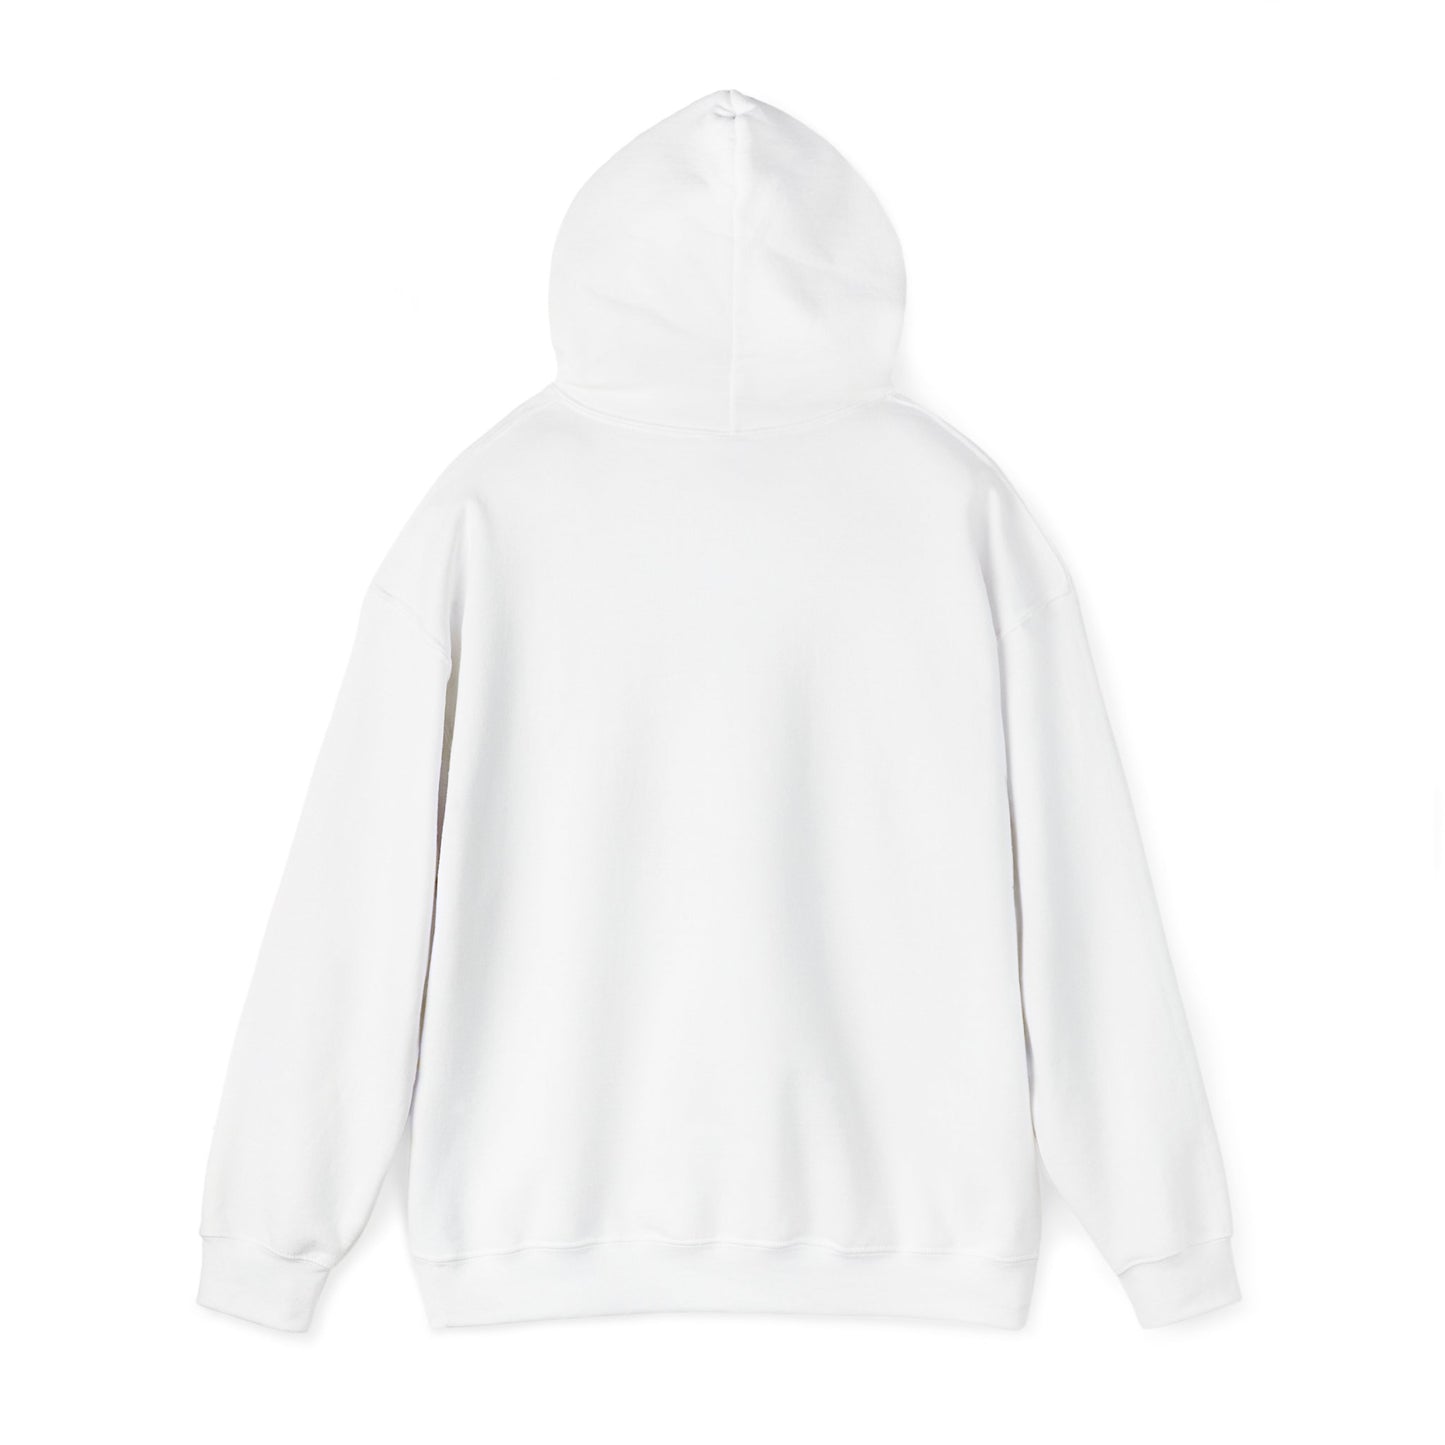 Gildan_Arizona_Unisex Heavy Blend™ Hooded Sweatshirt